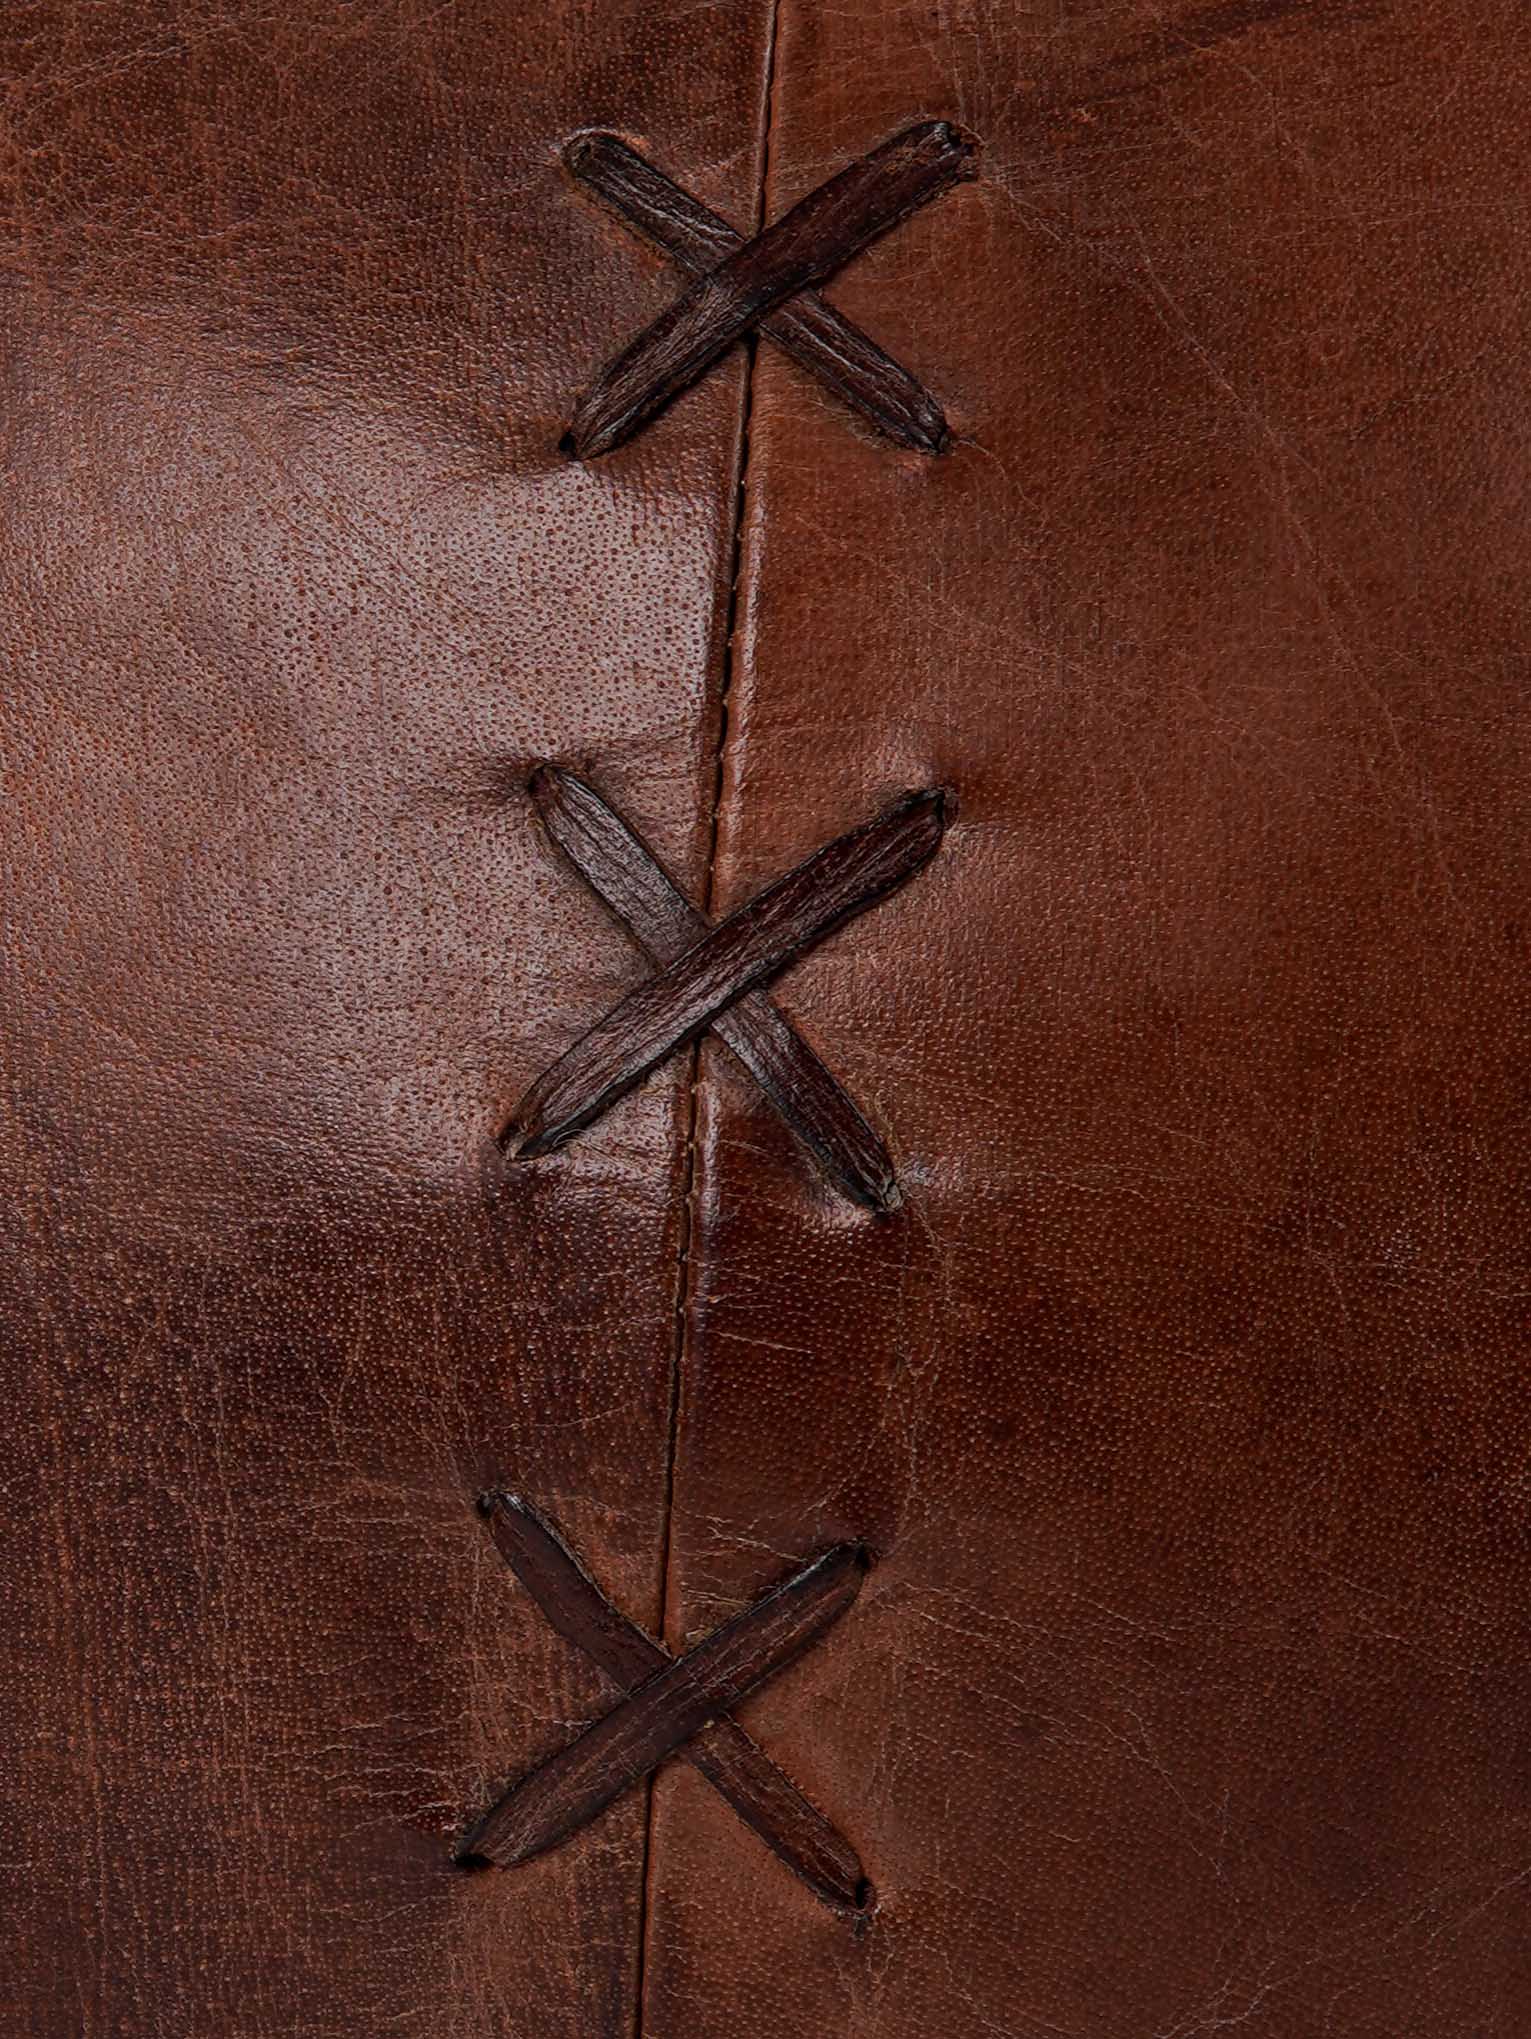 Artisan Stitch Leather Pouf